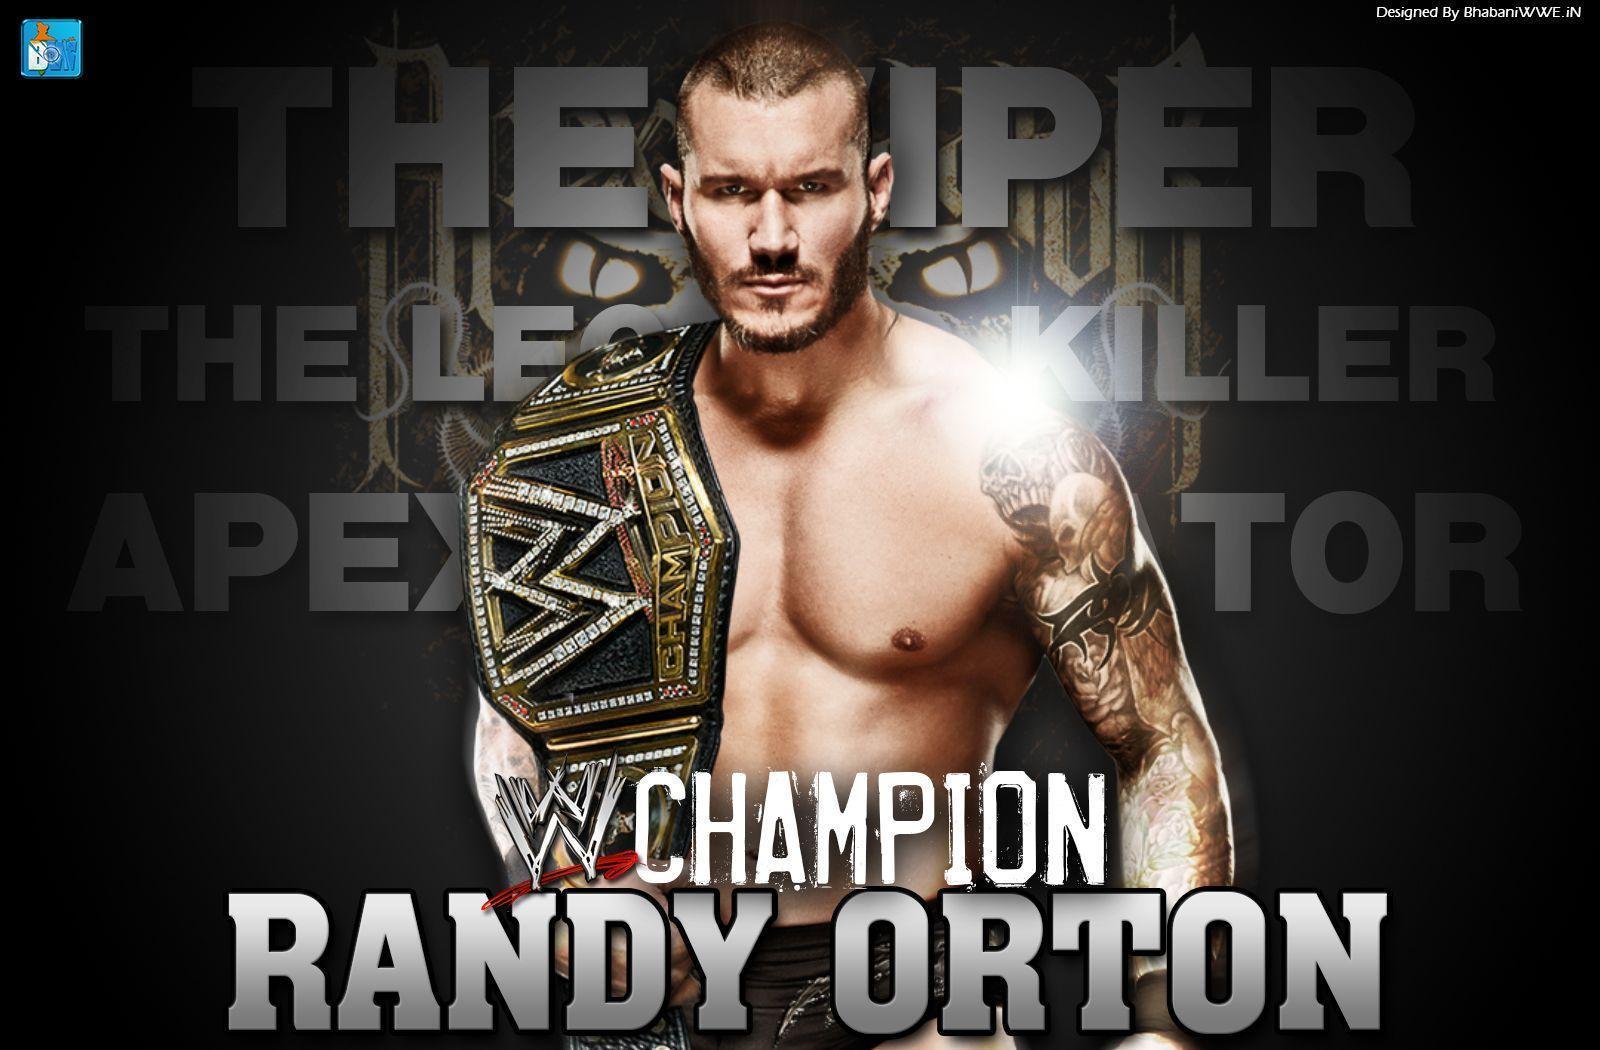 Wallpaper Download New WWE Champion "The Viper" Randy Orton HQ